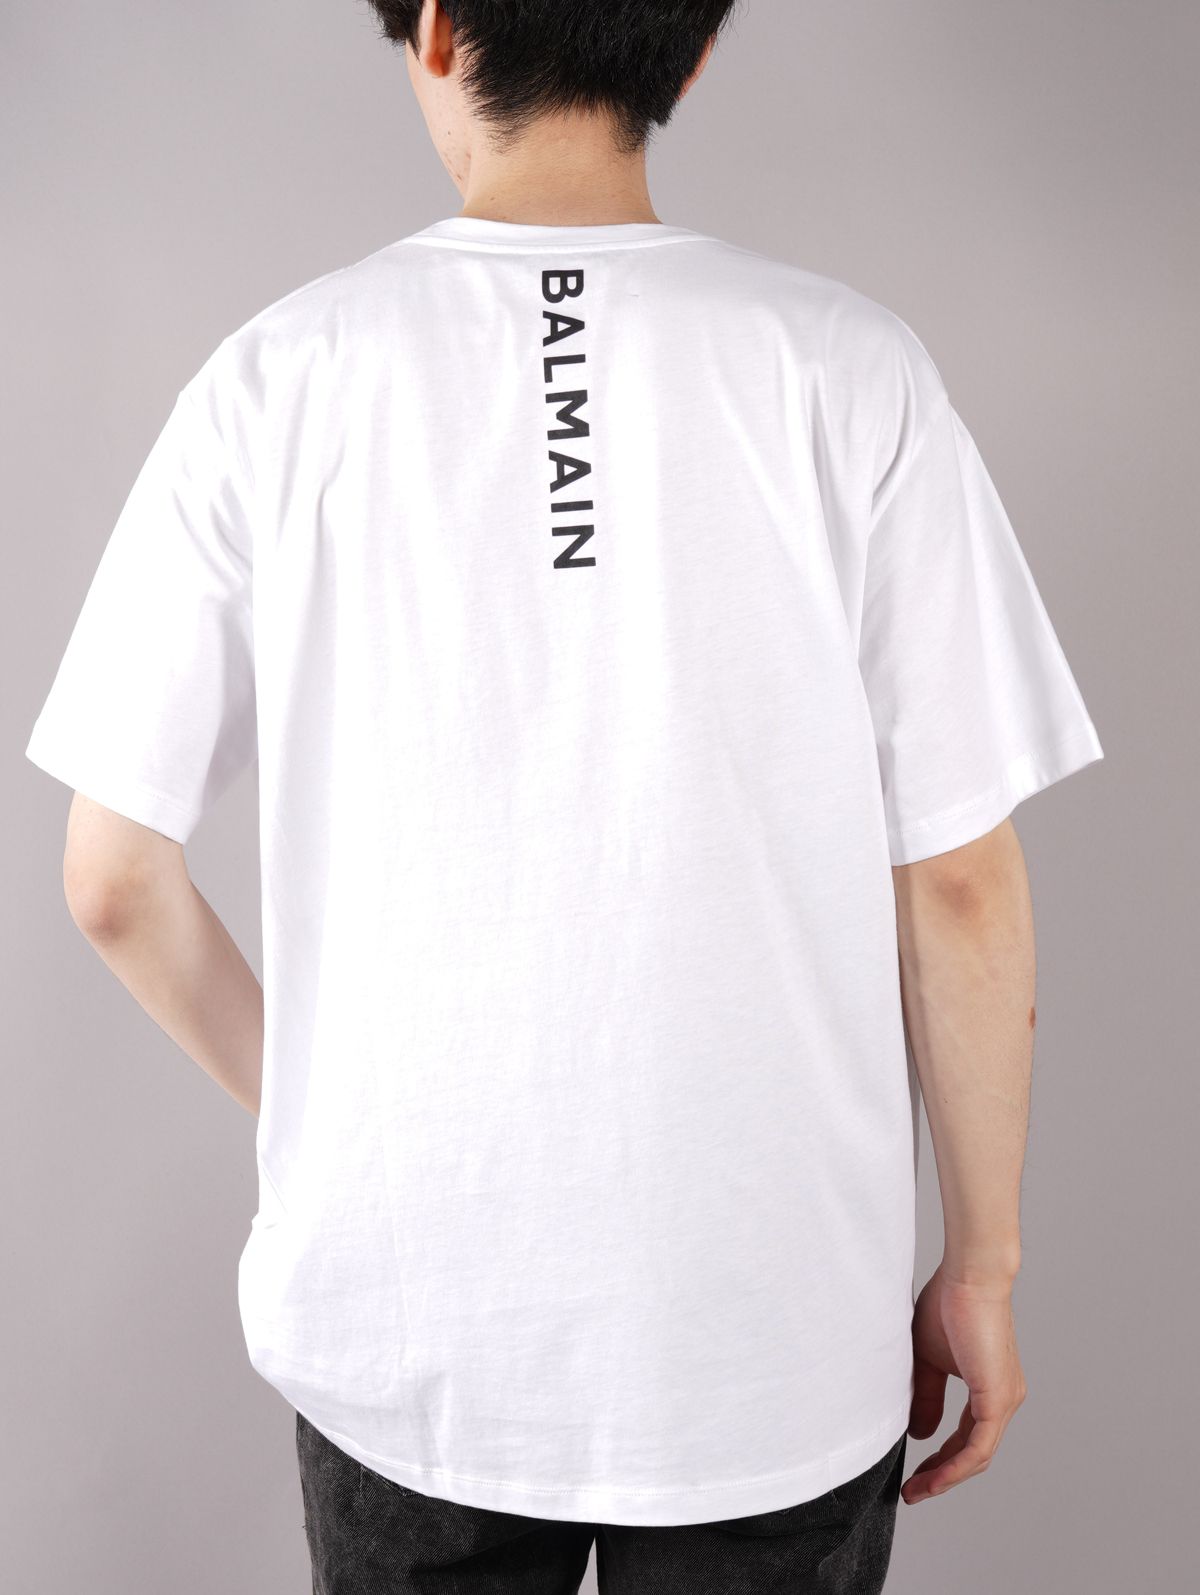 BALMAIN - 【ラスト1点】BALMAIN BUCK T-SHIRT / バックロゴ T ...